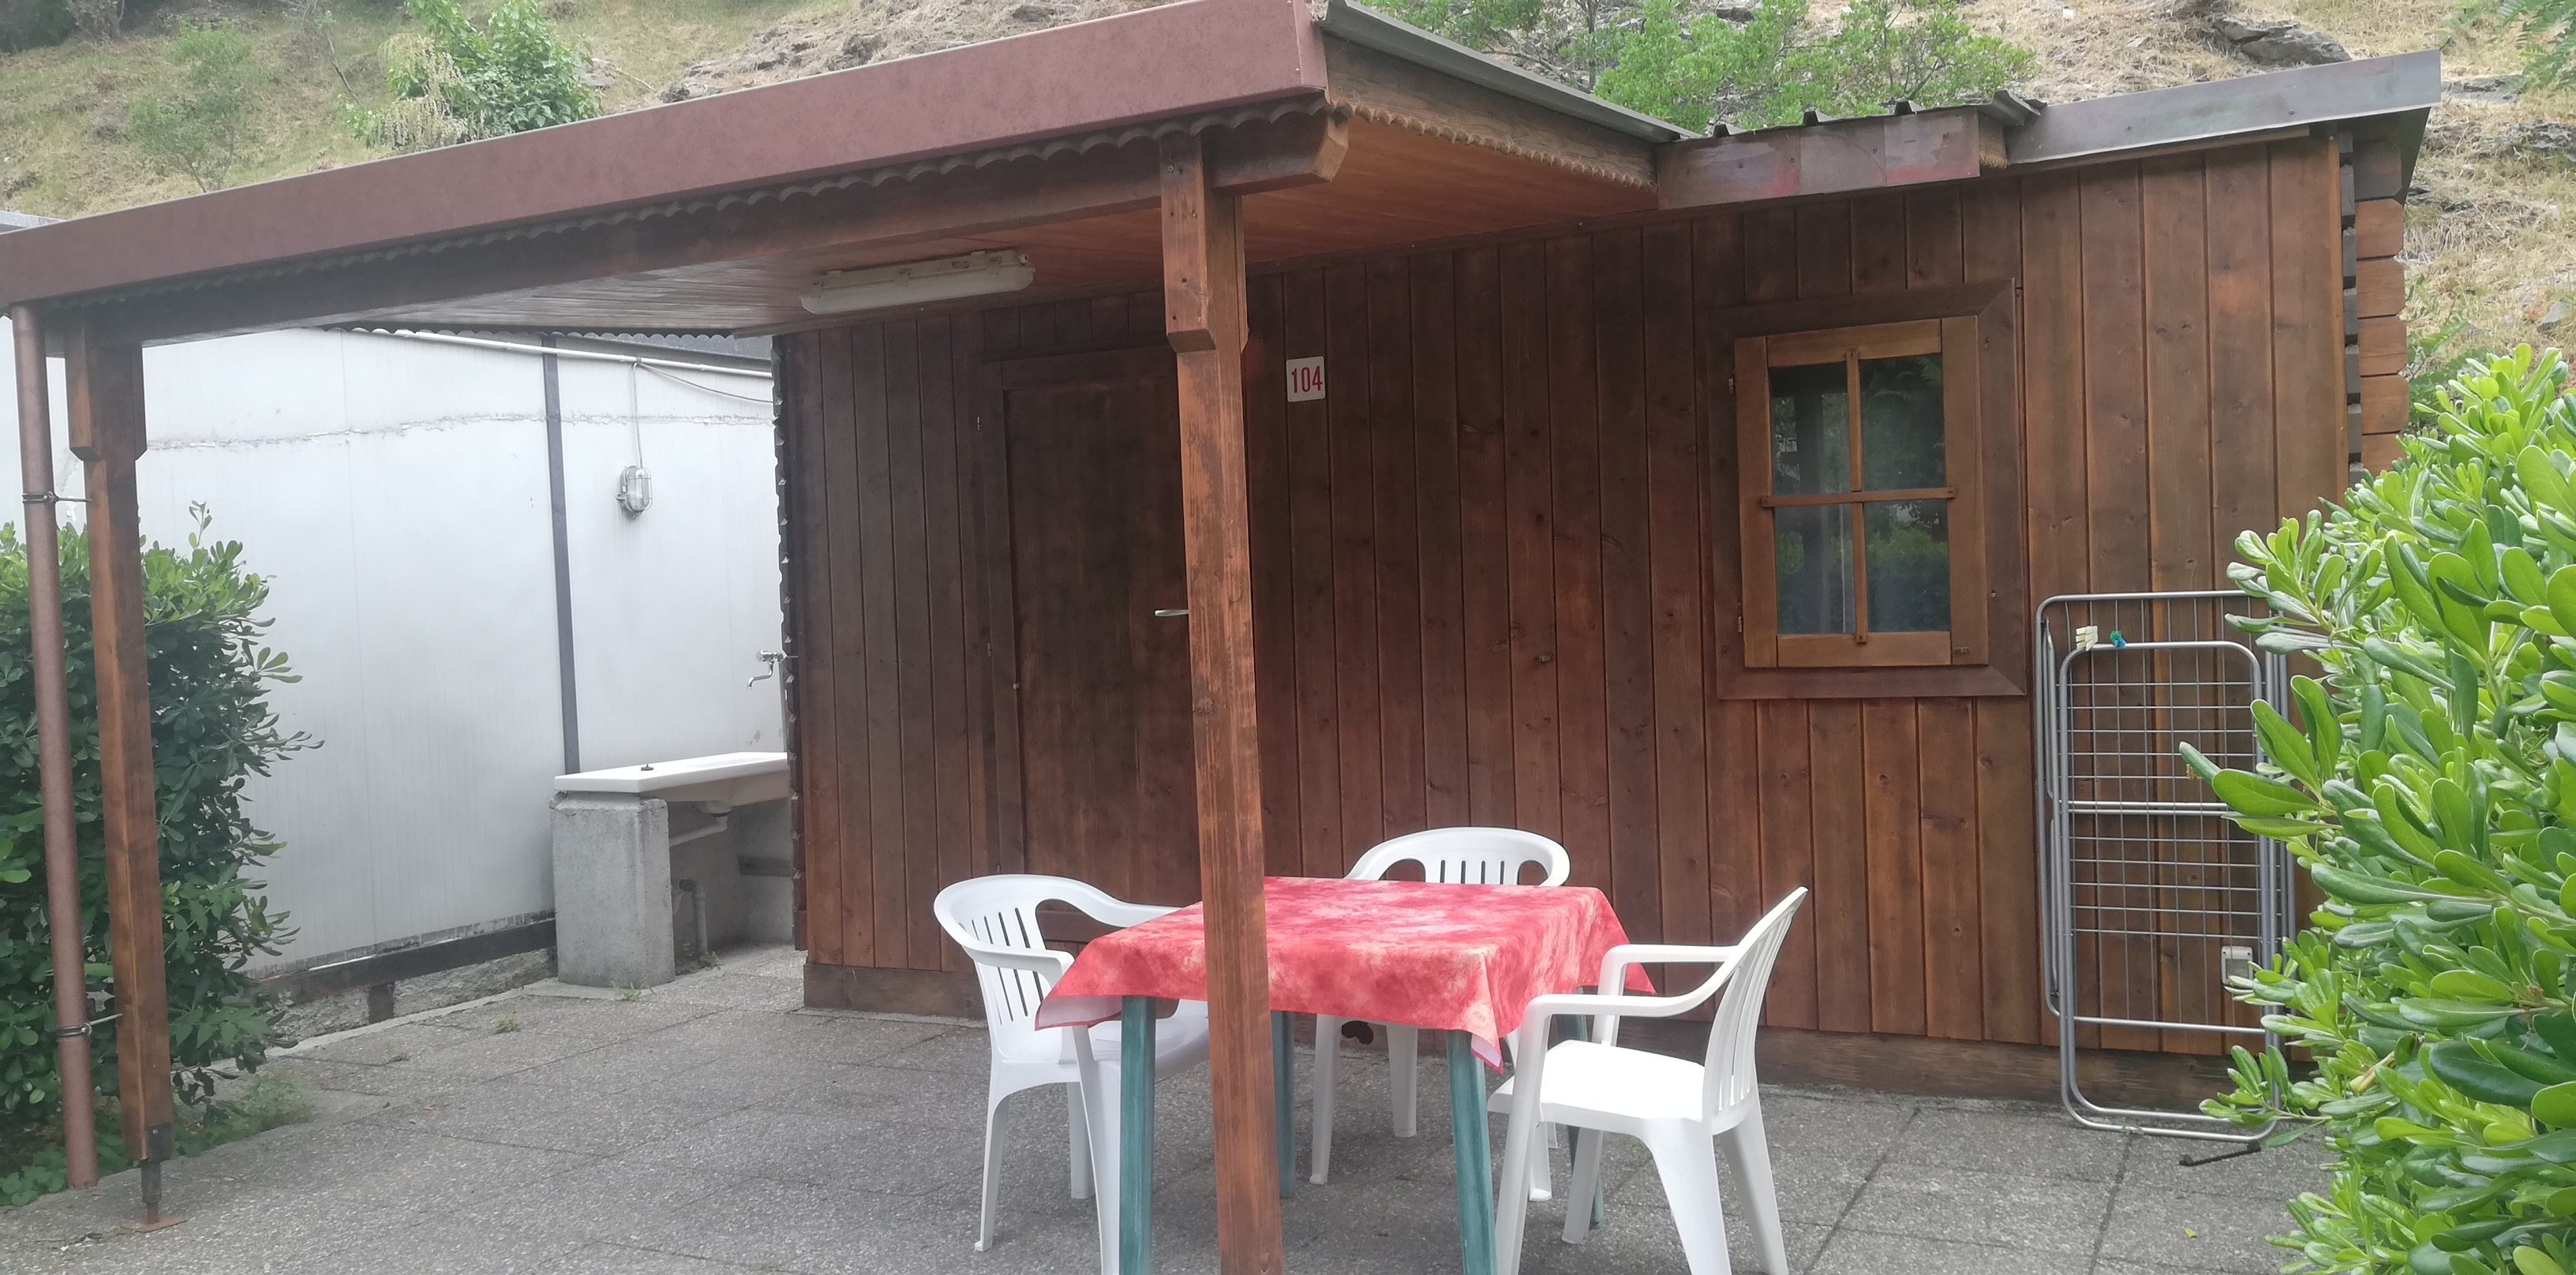 Accommodation - Cabin Besafe - Villaggio Camping Valdeiva